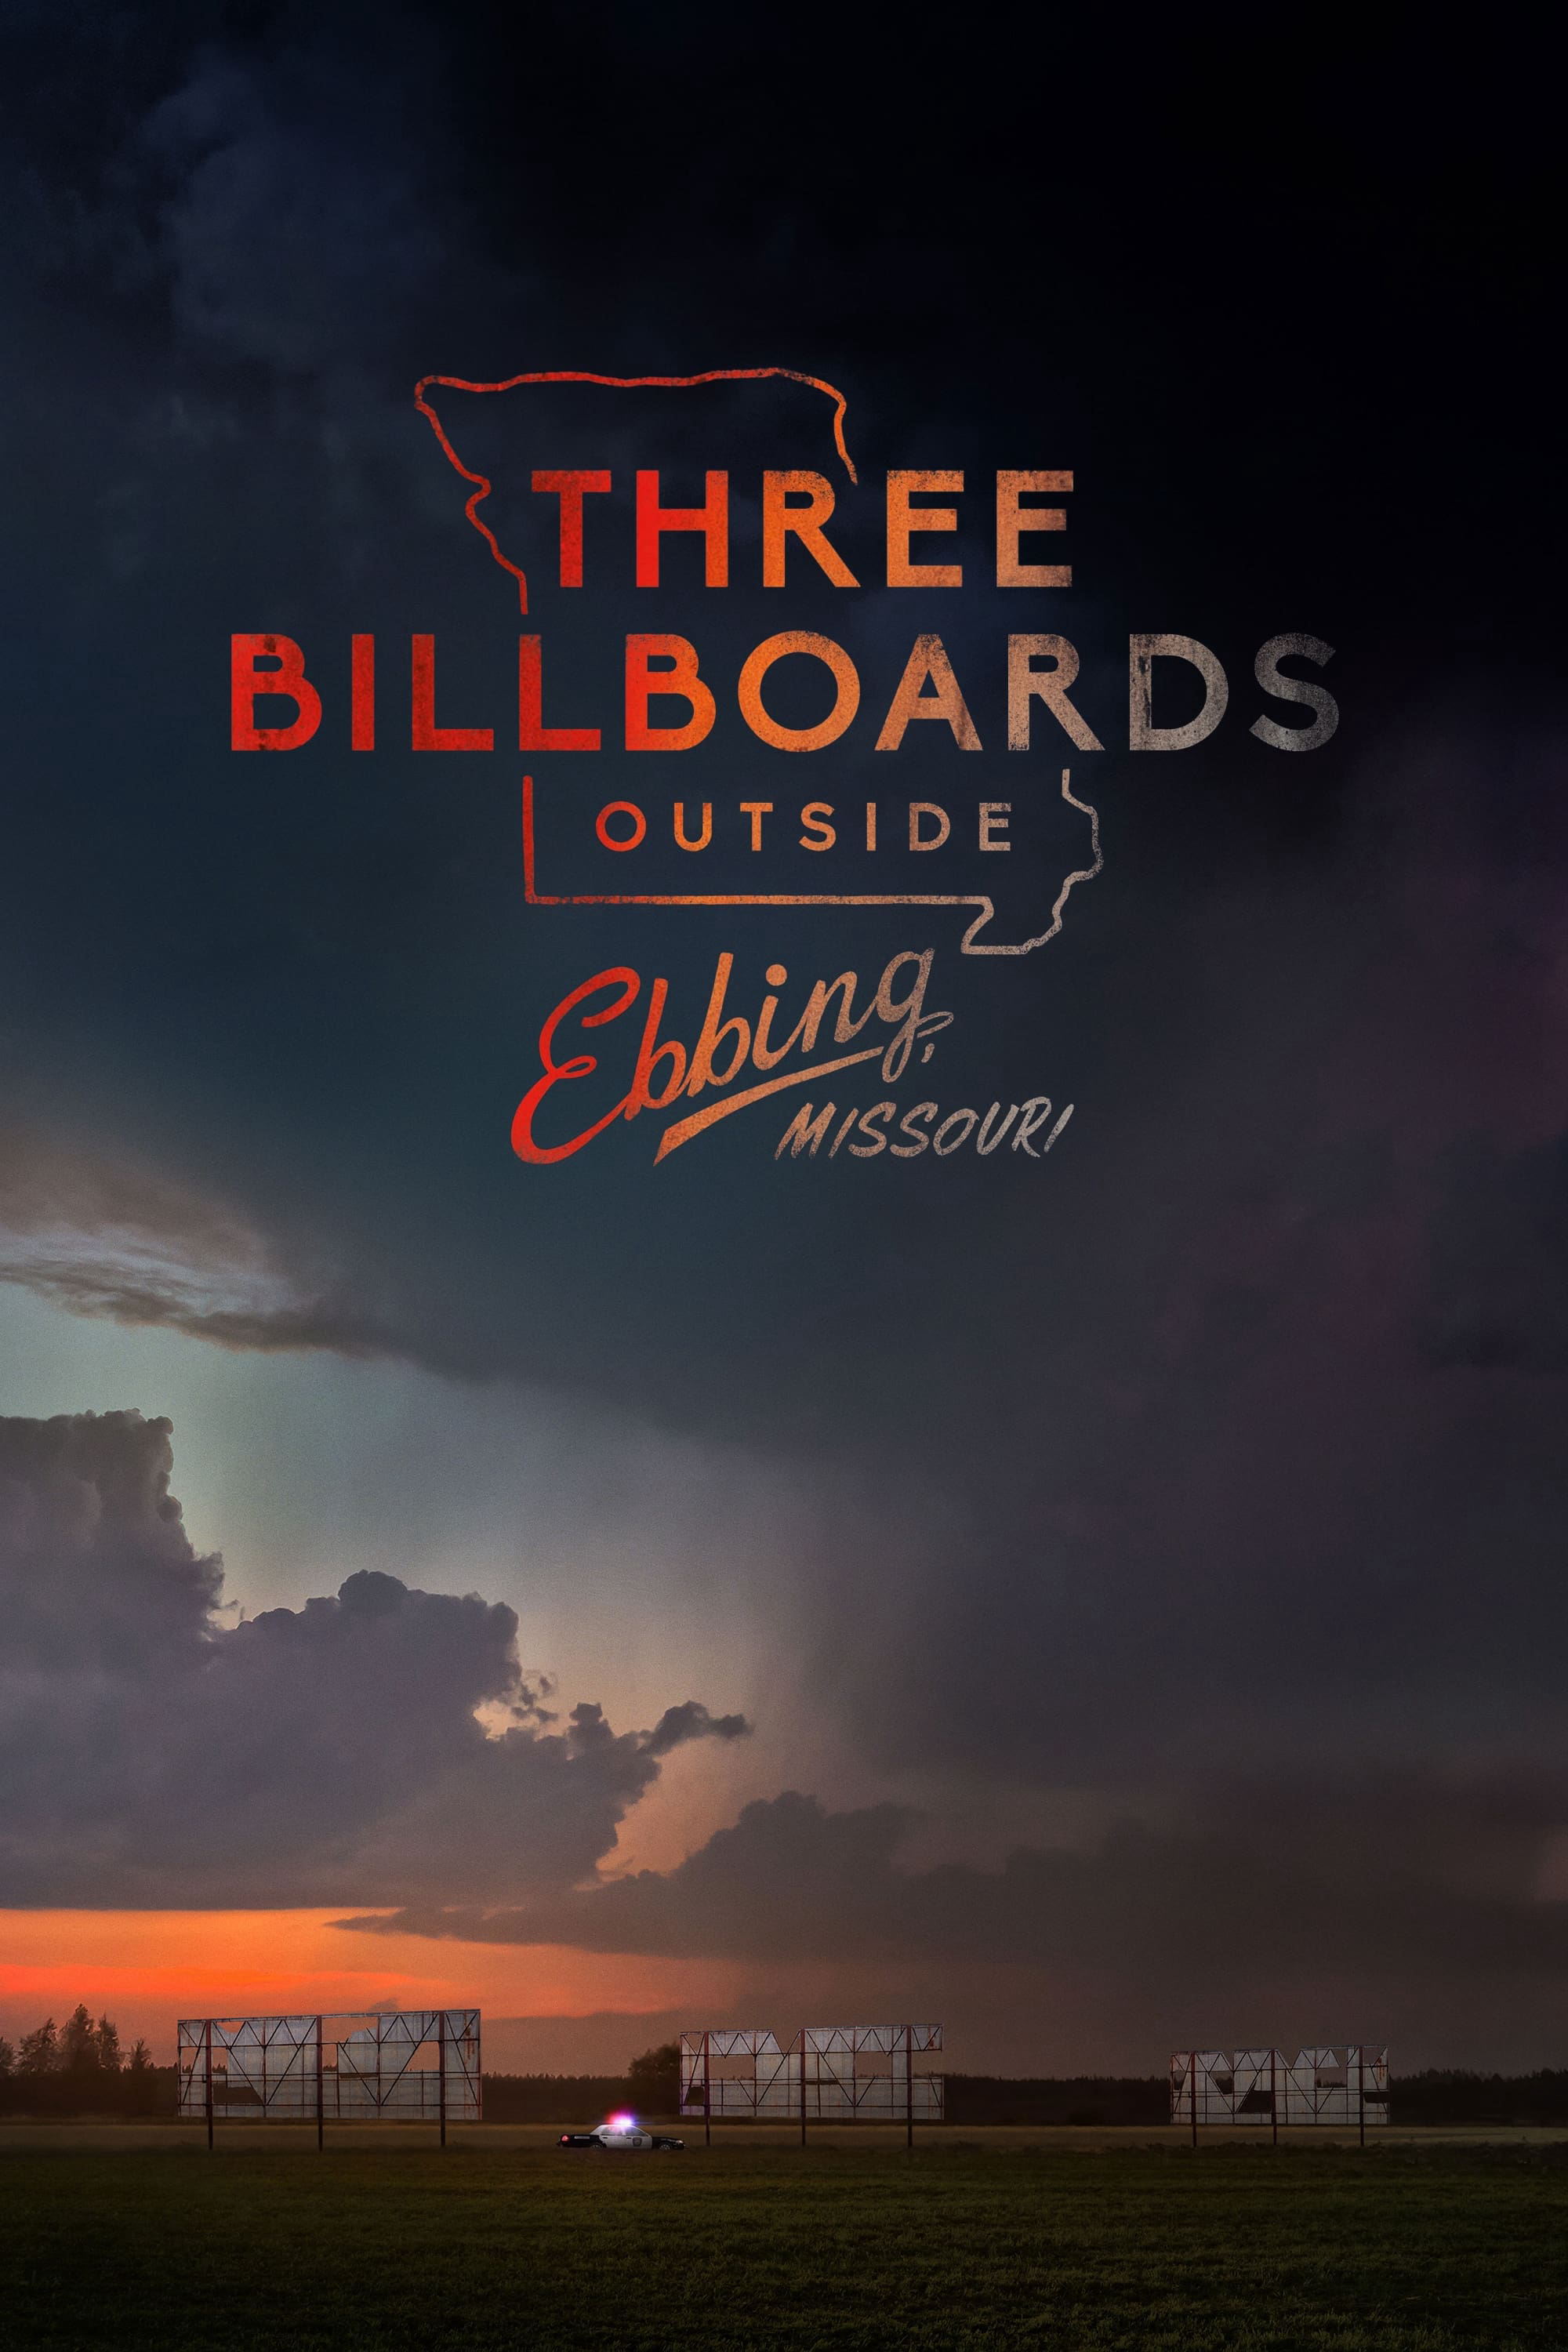 Xem Phim Ba Biển Quảng Cáo Ngoài Trời ở Missouri (Three Billboards Outside Ebbing, Missouri)